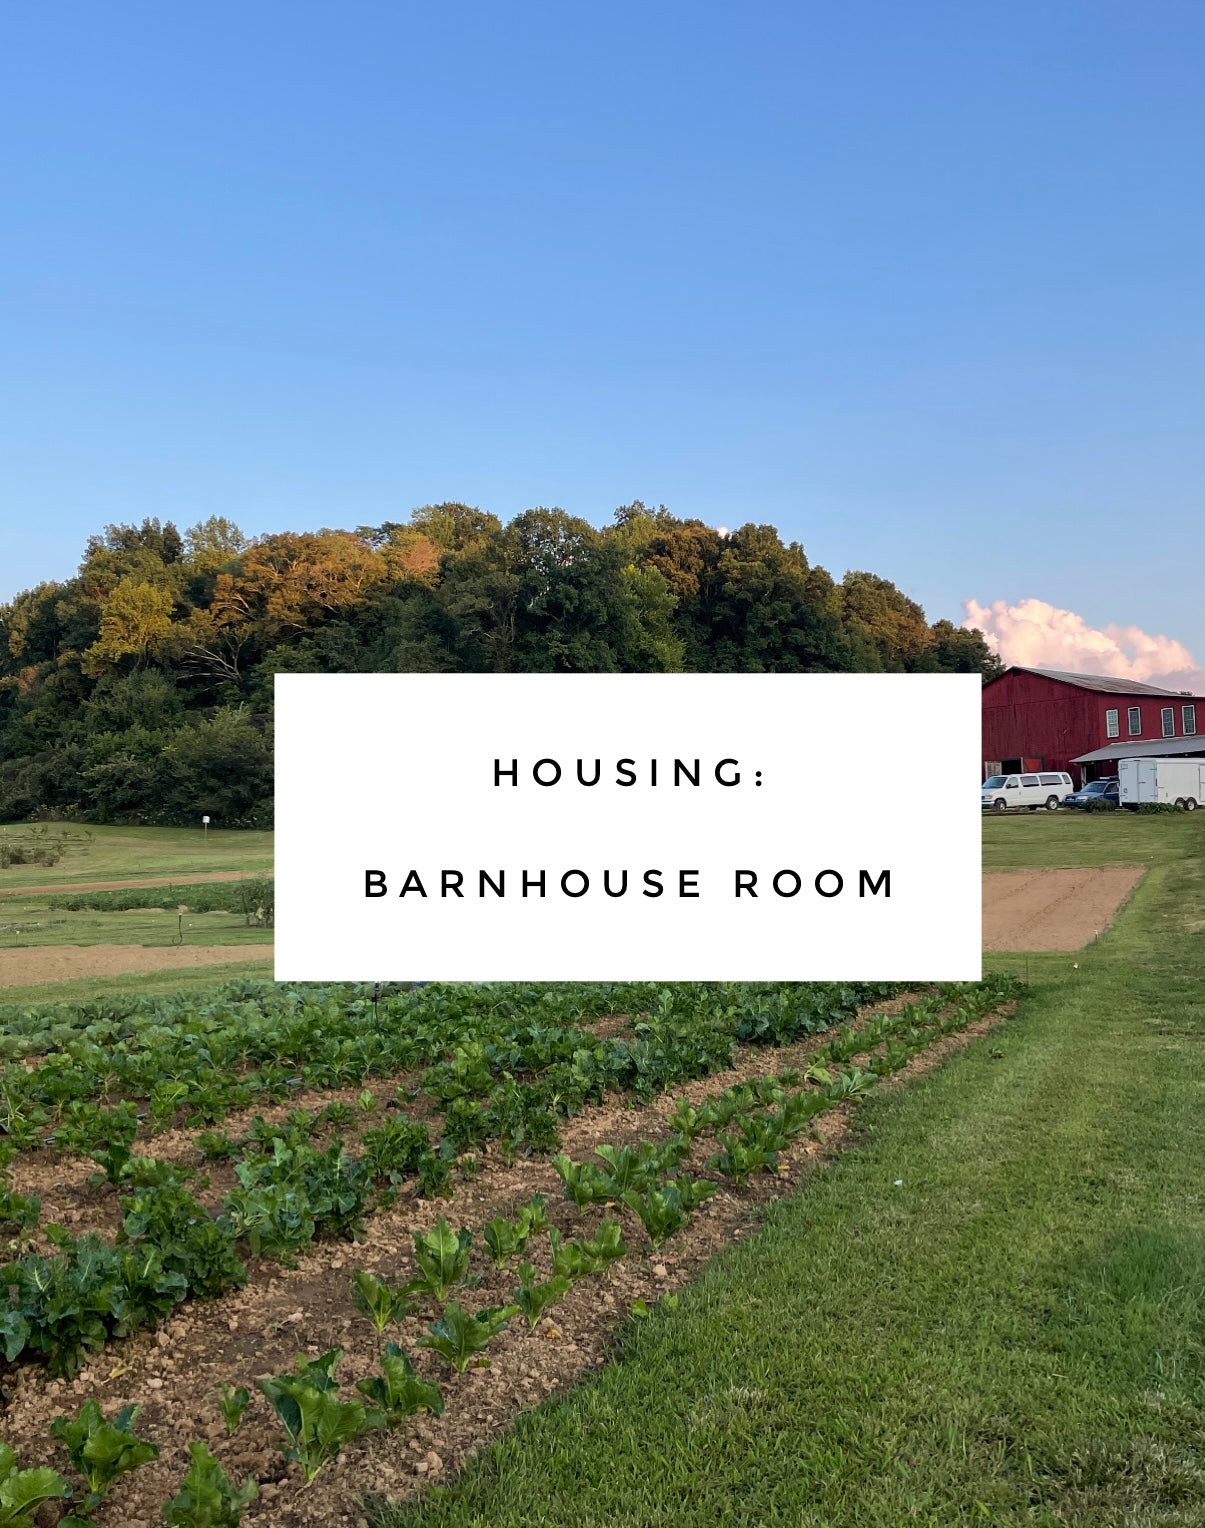 Barnhouse Room - Intro to Market Gardening